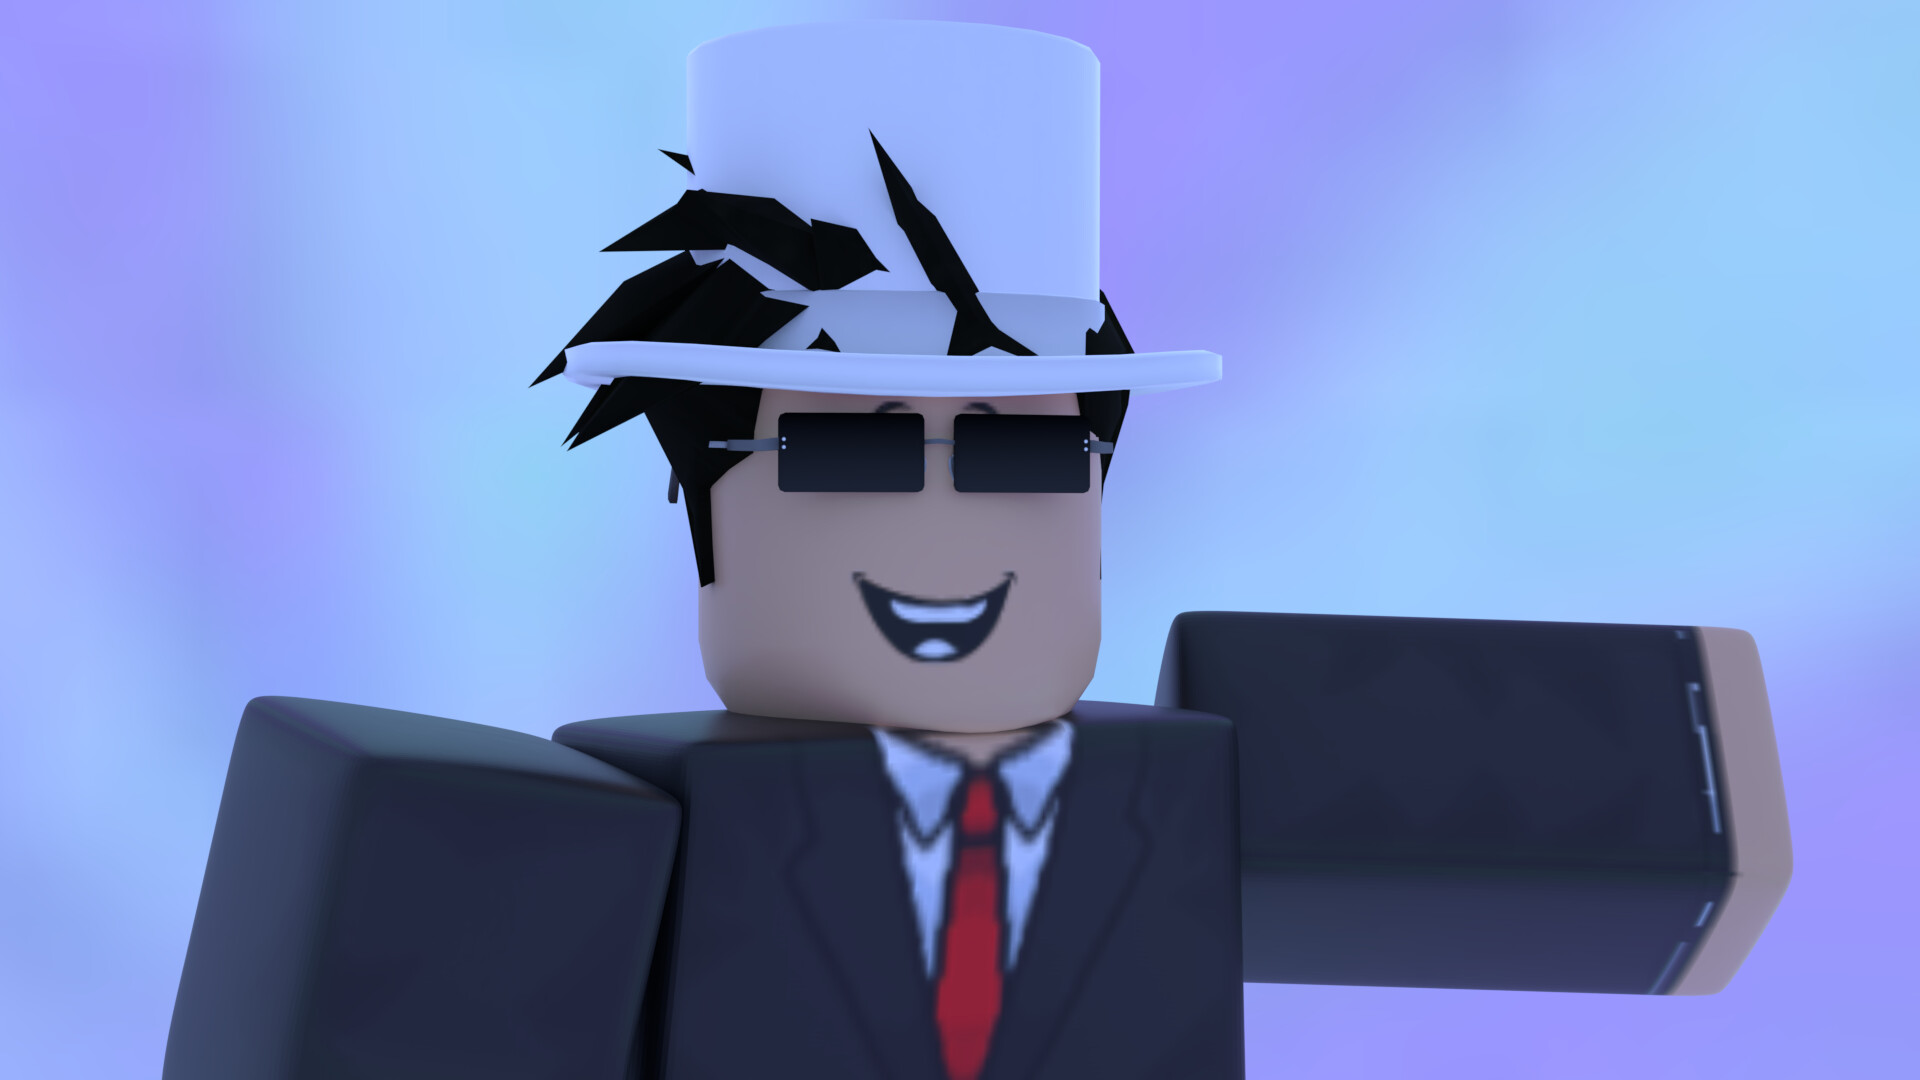 My Roblox avatar